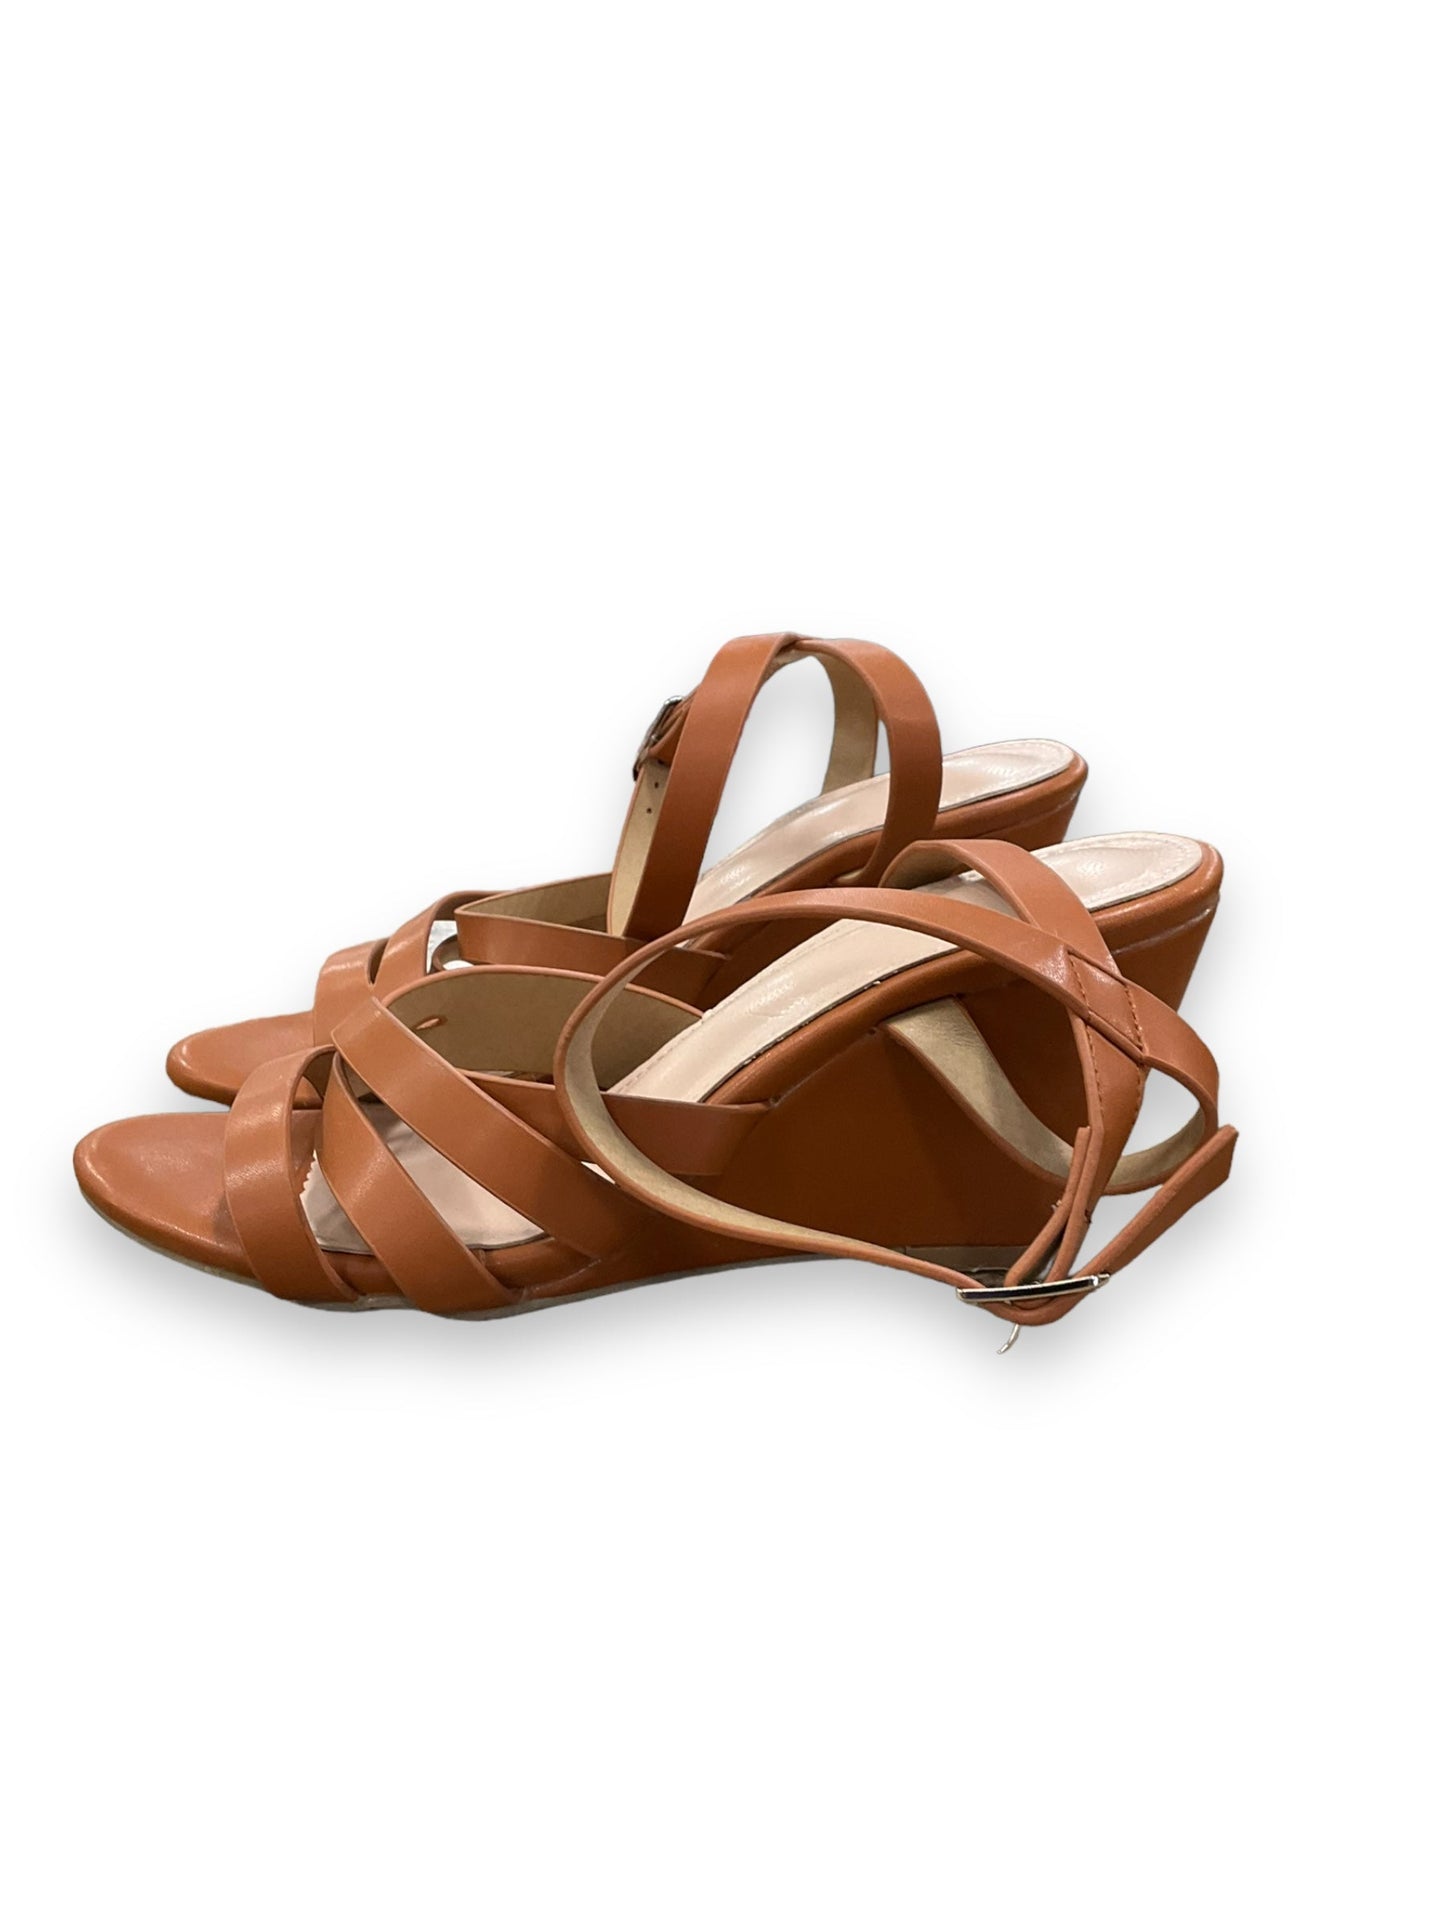 Brown Sandals Heels Wedge Cmf, Size 8.5